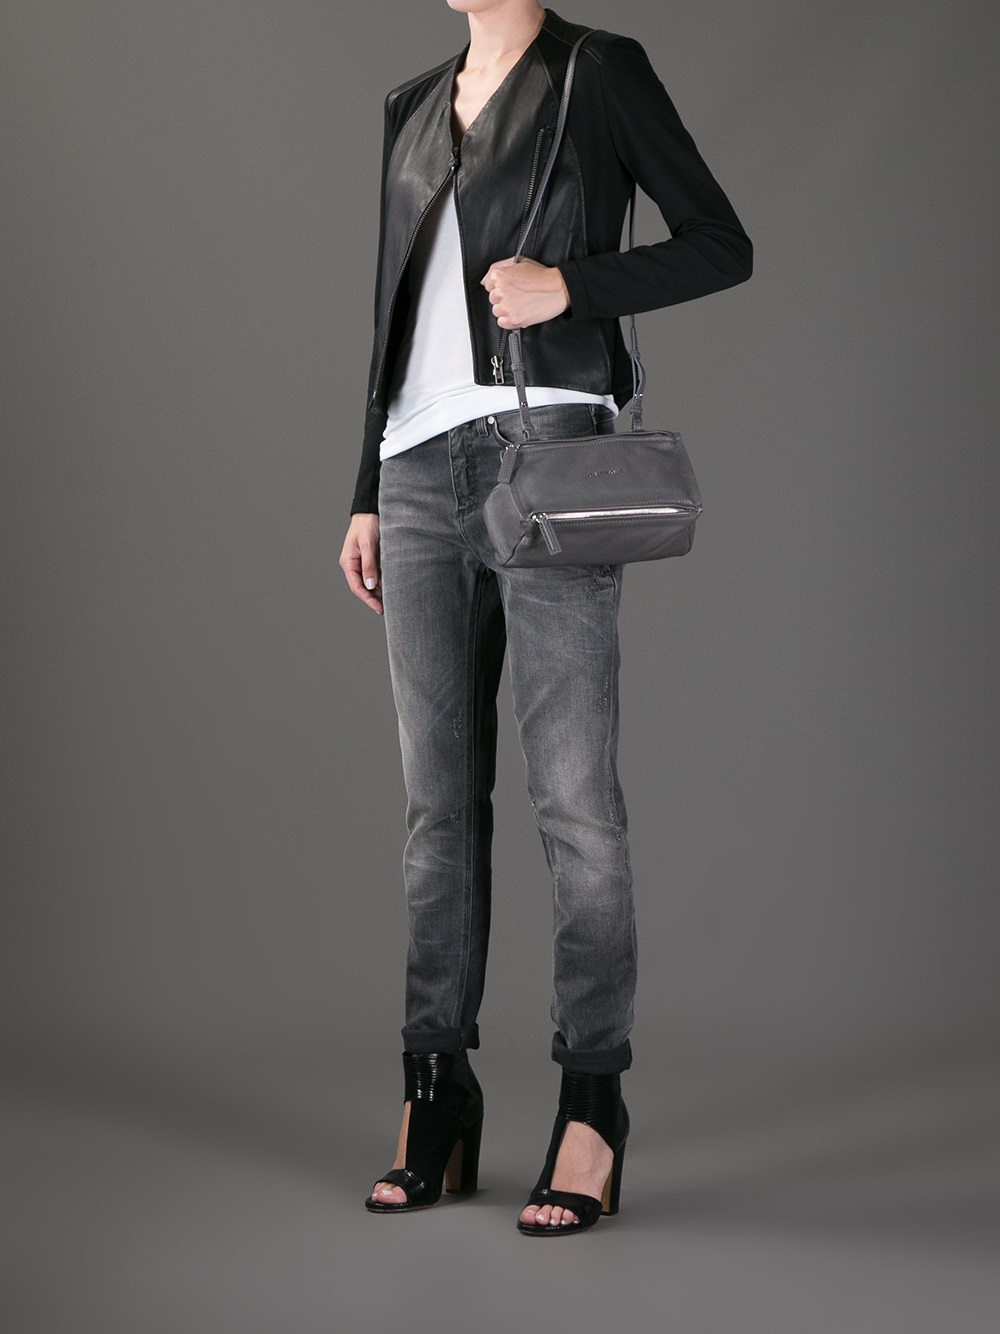 Givenchy Pandora Mini Bag in Grey (Gray) - Lyst